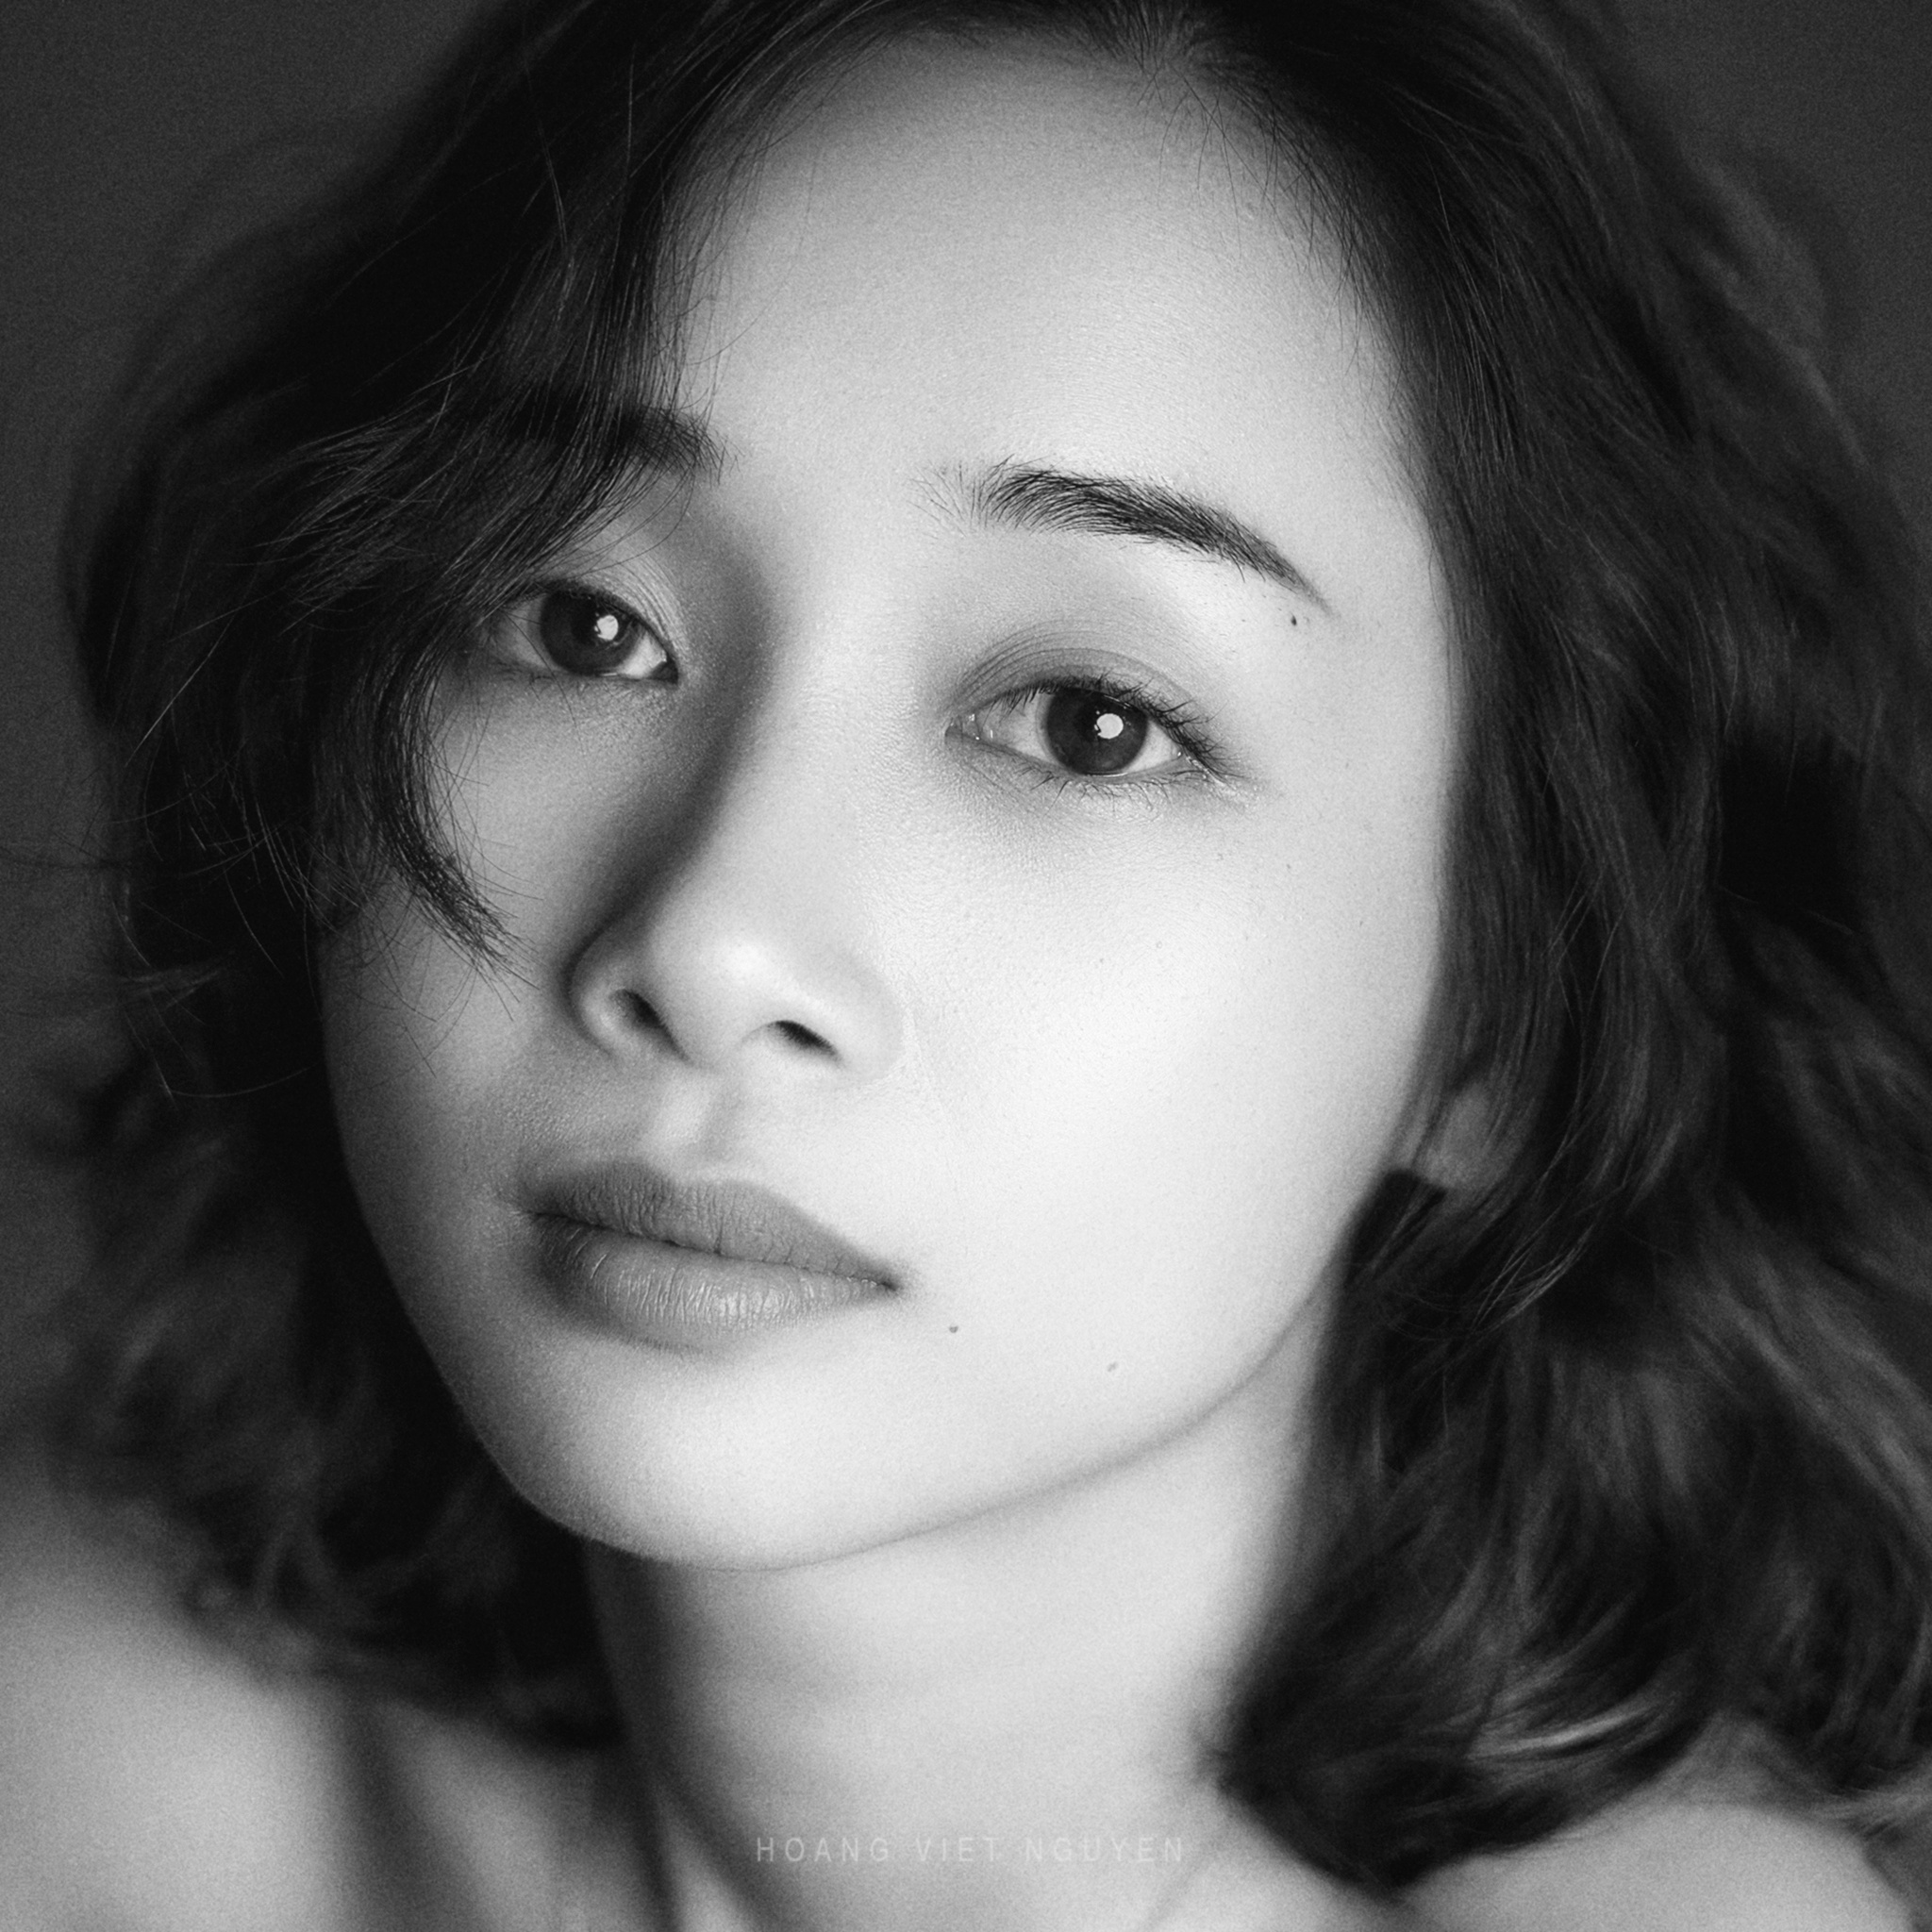 portrait, mood portrait, face, mood, asian, vietnamese, vietnam, eyes, close up, headshot, face, beauty, bw, black and white, monochrome, Hoang Viet Nguyen